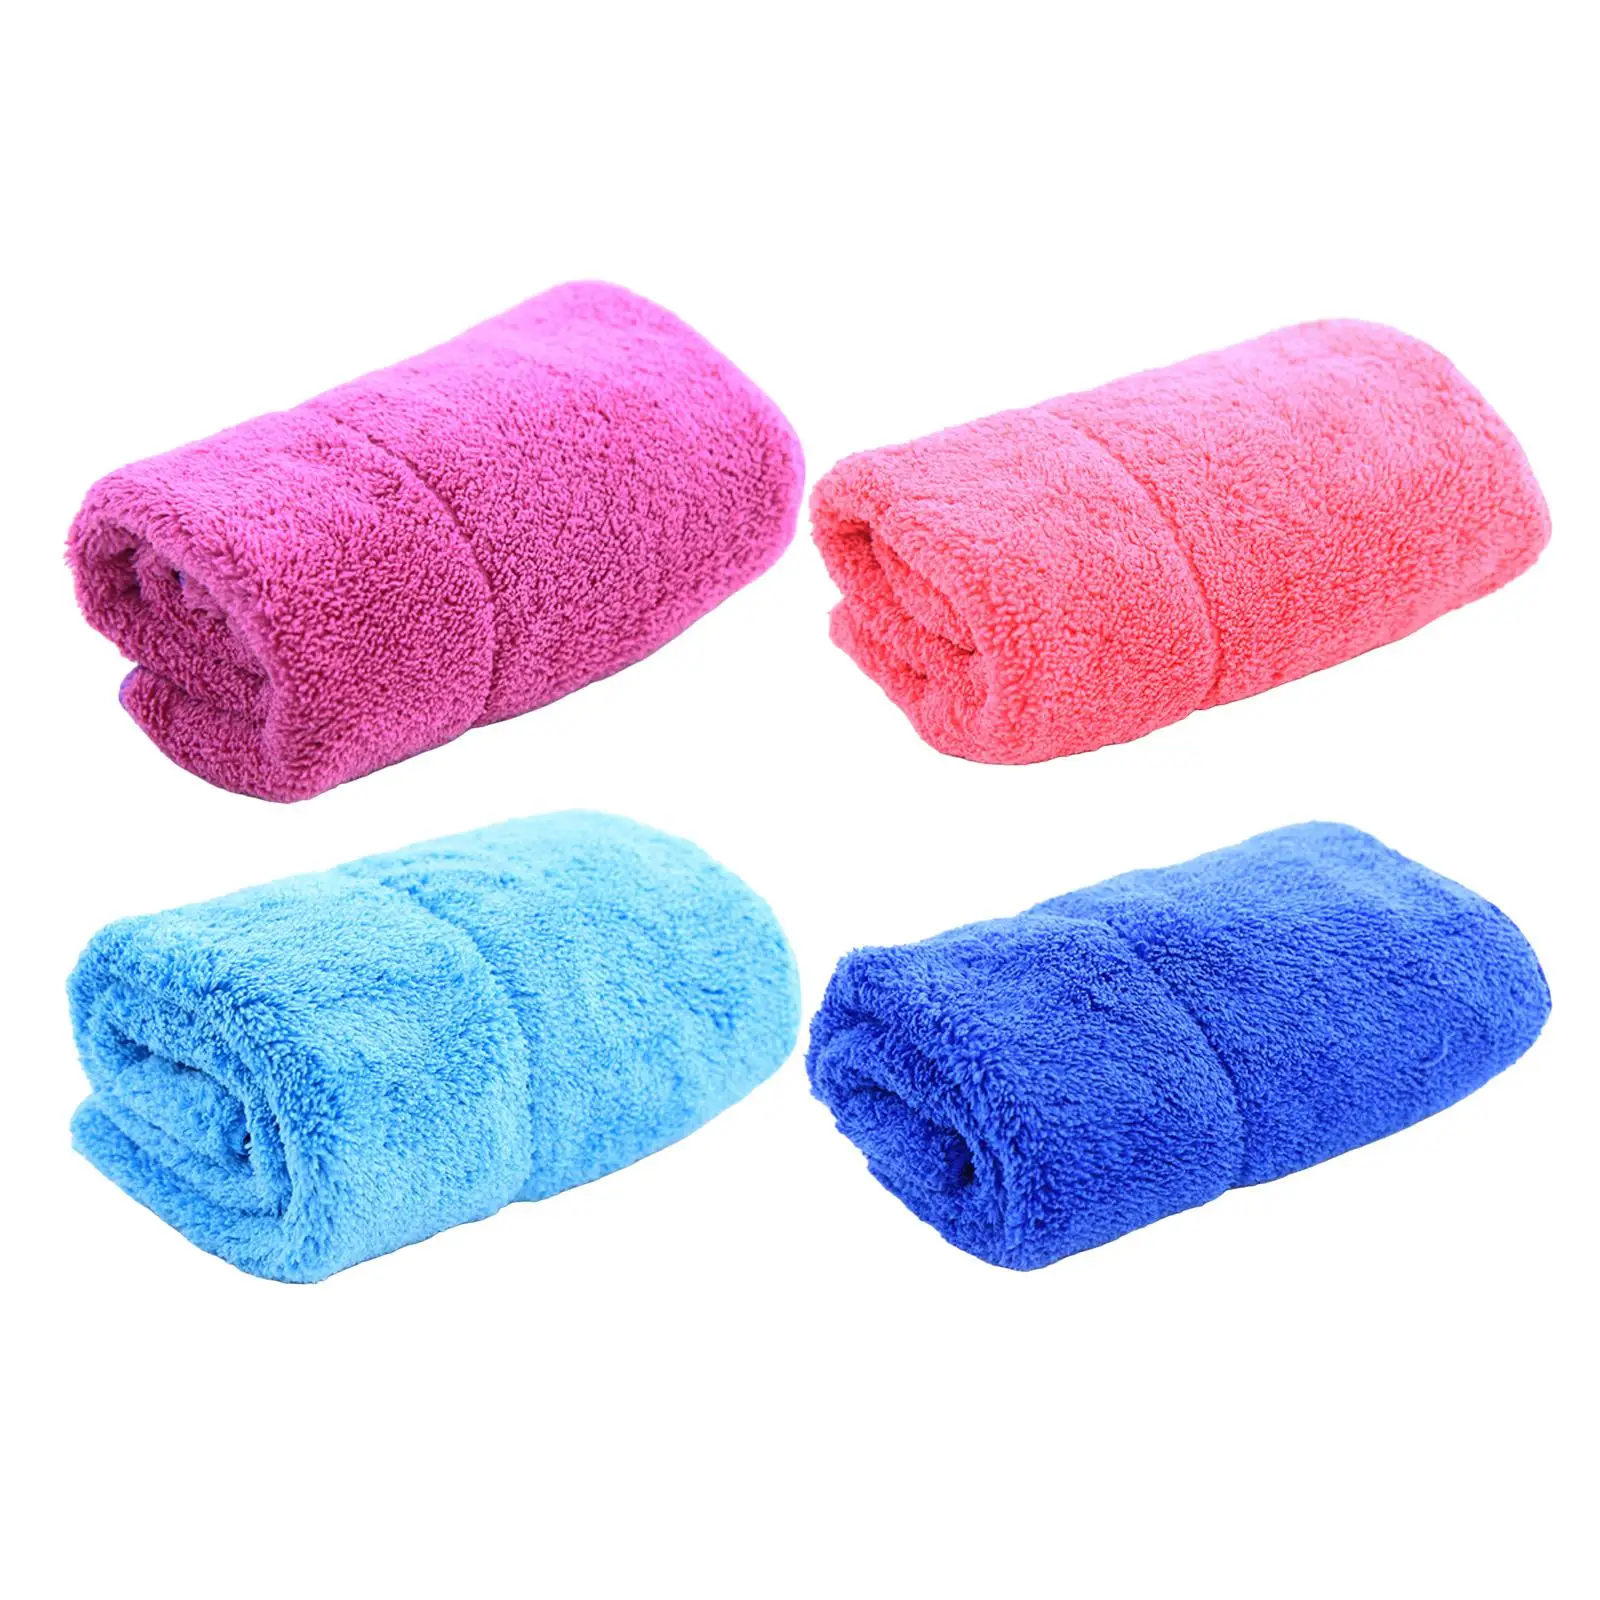 Ice Skate Wipe Cloth Cleaning Care Comfortable Washcloths Washing for Skating Figure Skates Shoe Hockey Skates Window